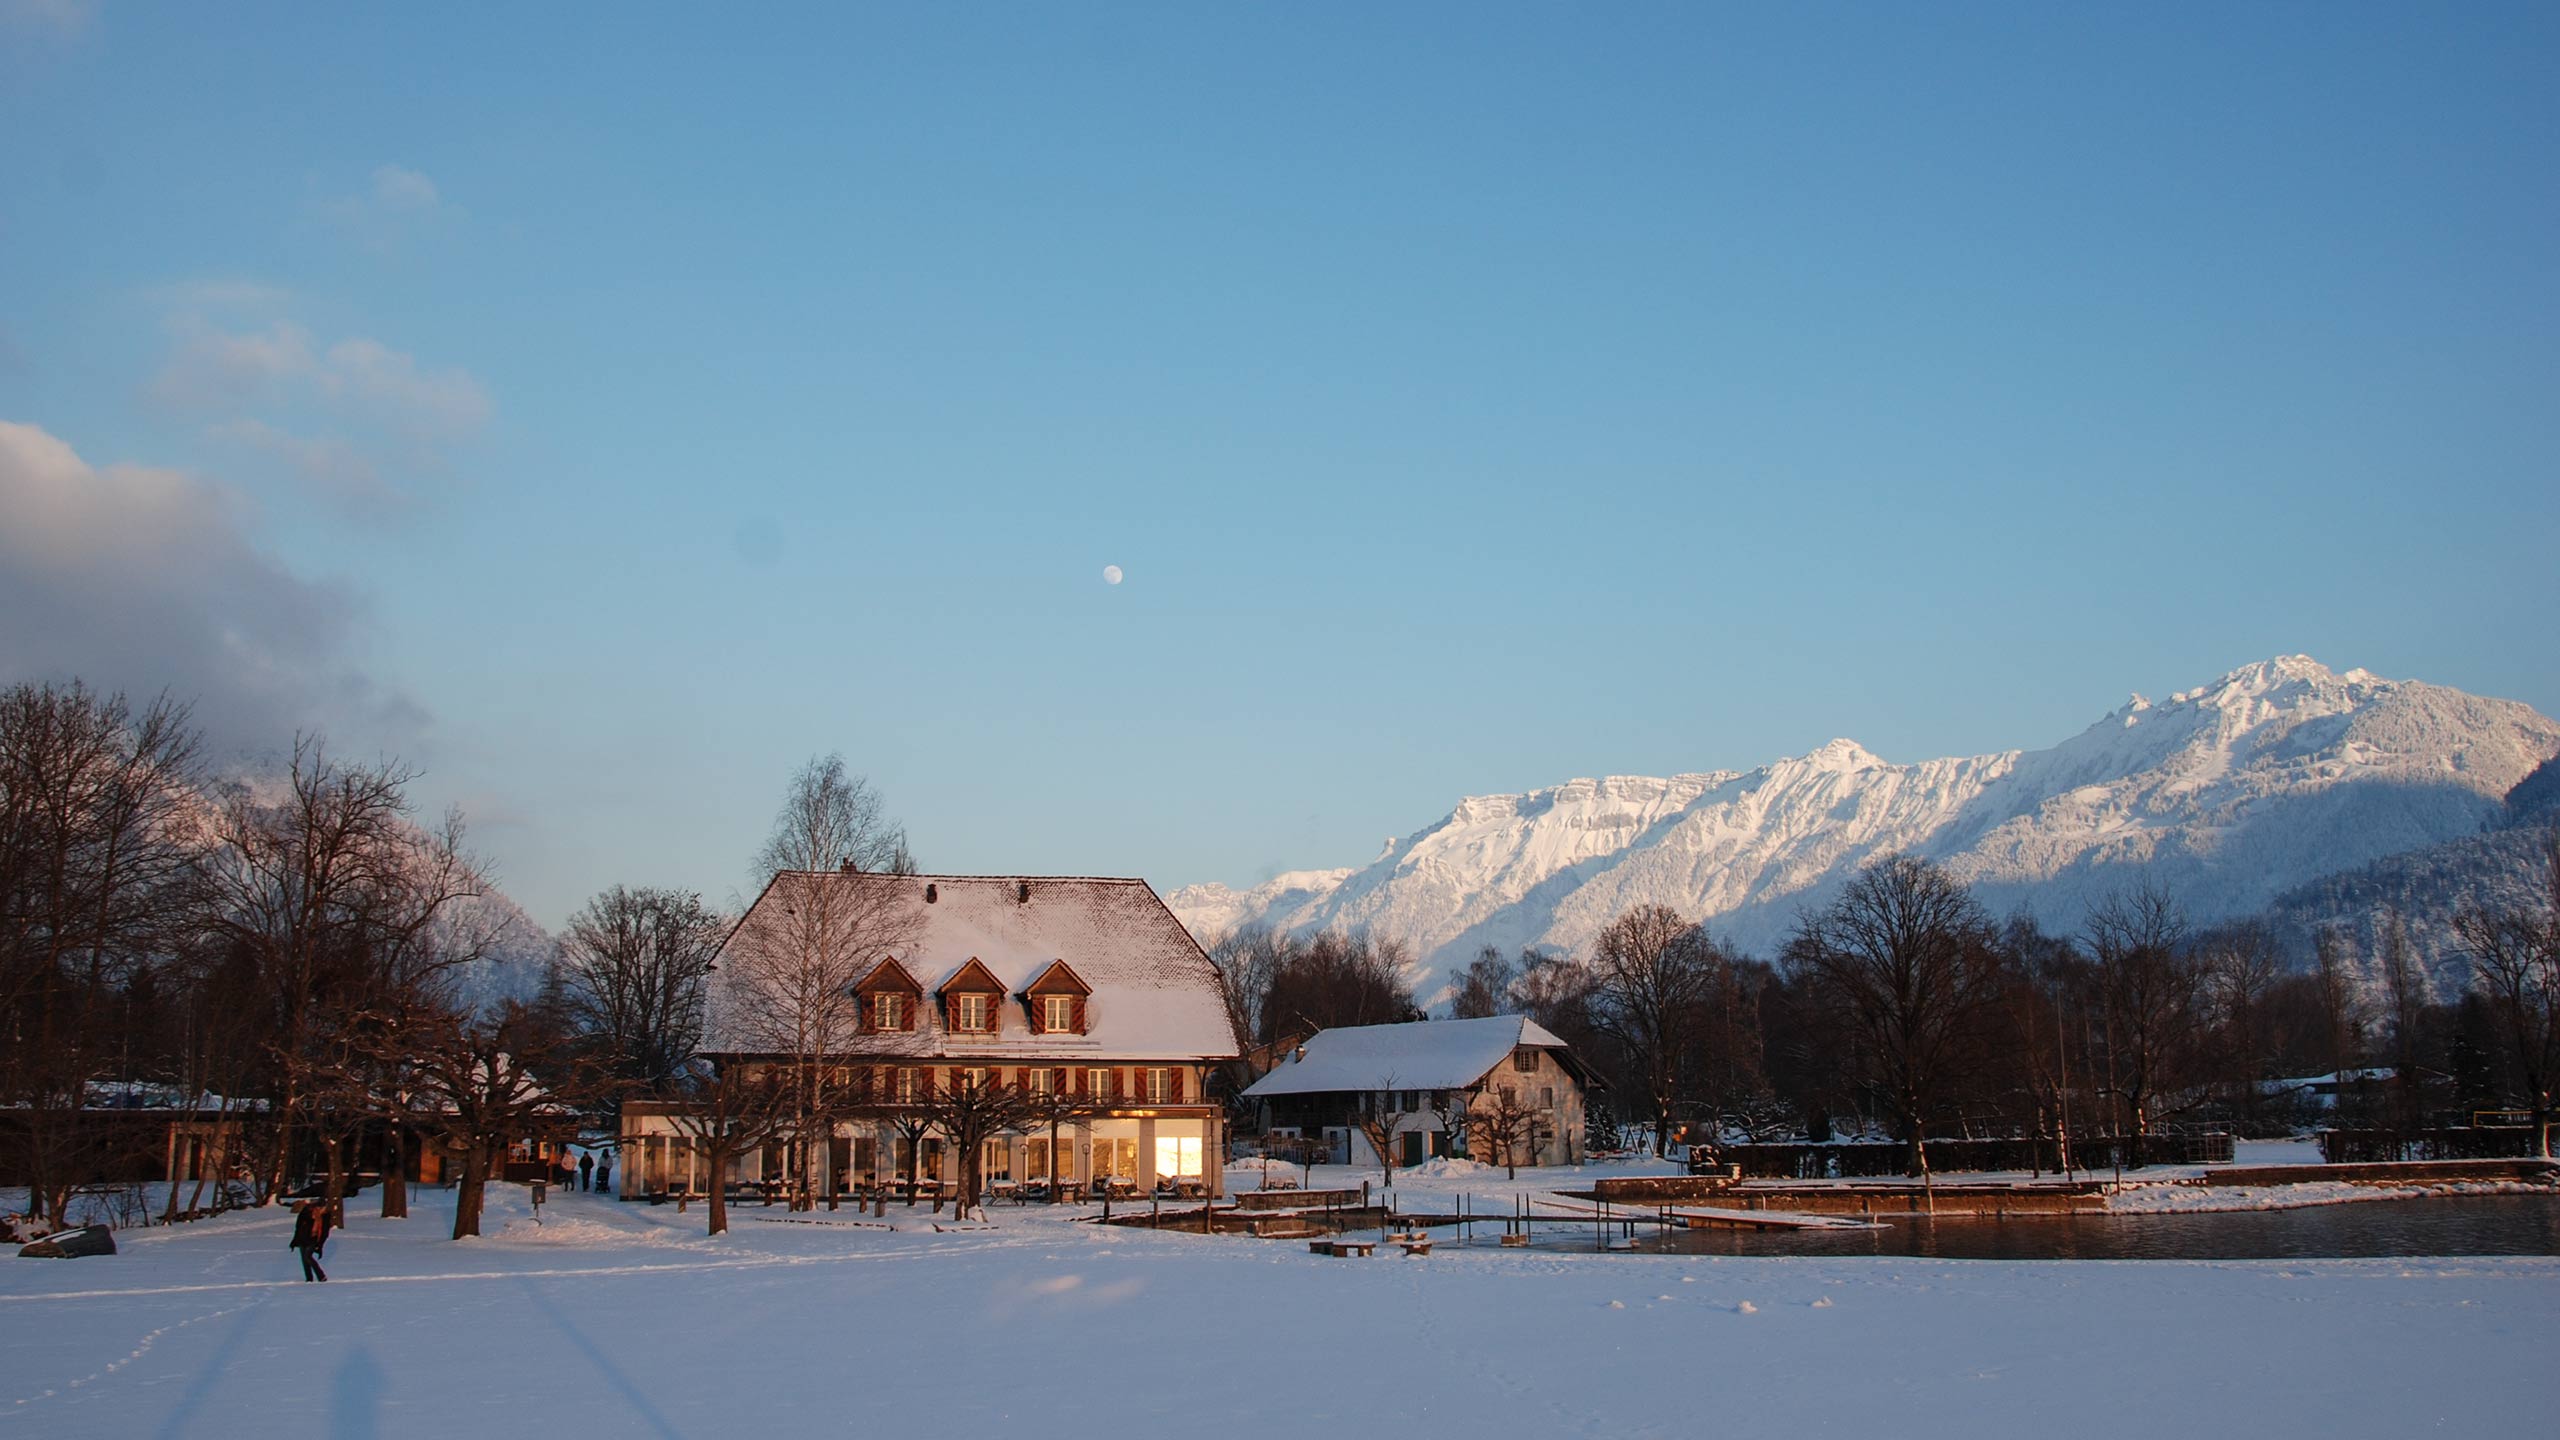 restaurant-neuhaus-gebaeude-winter-schnee-berge.jpg